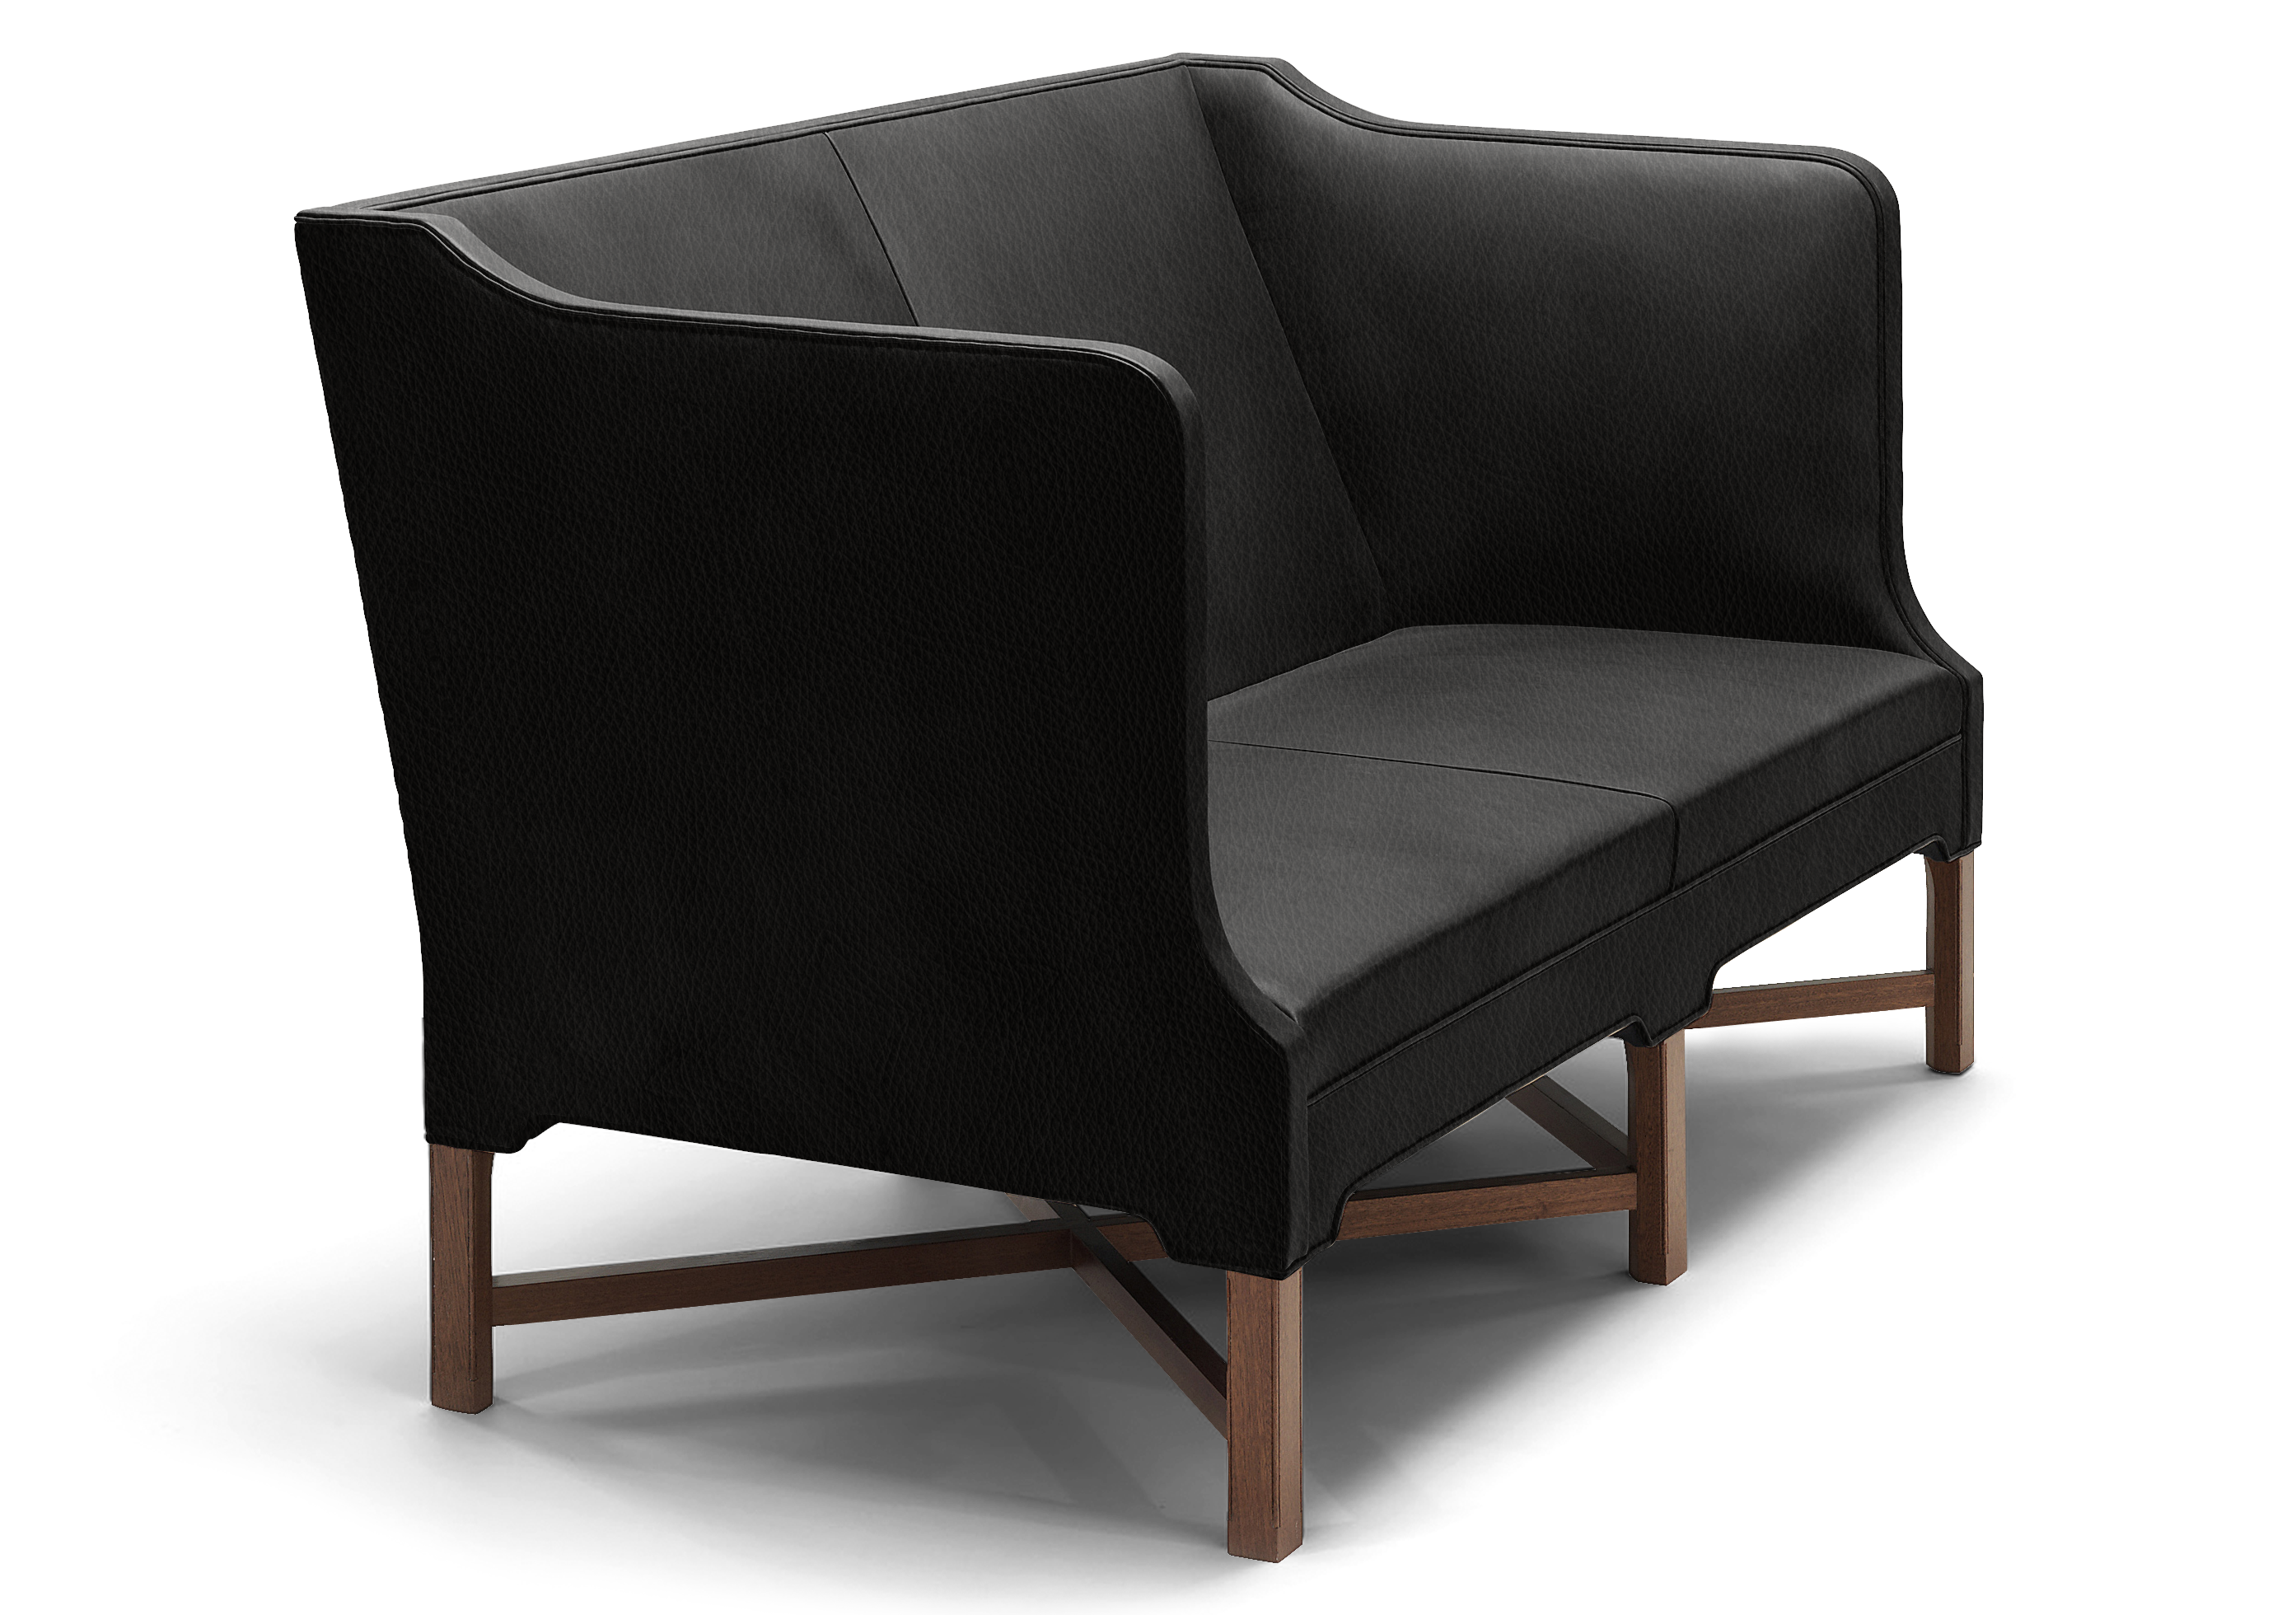 Kk41180 Sofa By Kaare Klint Carl, Legacy Leather International Sofa